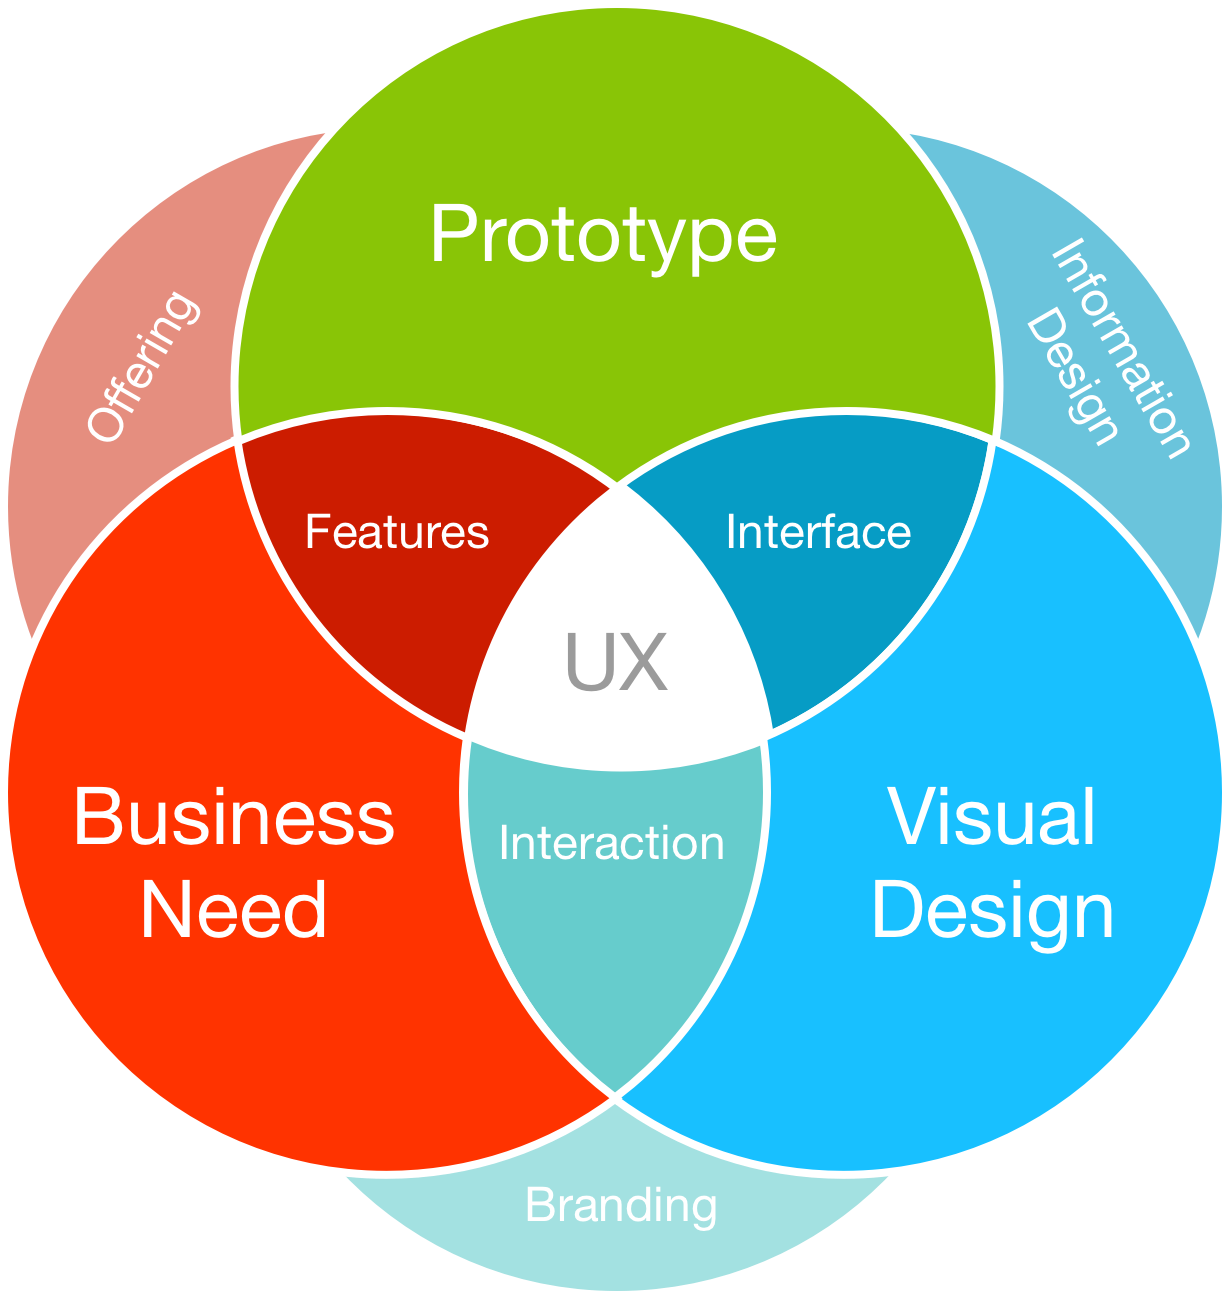 Ux Design Features - User Experience Design (1230x1299)